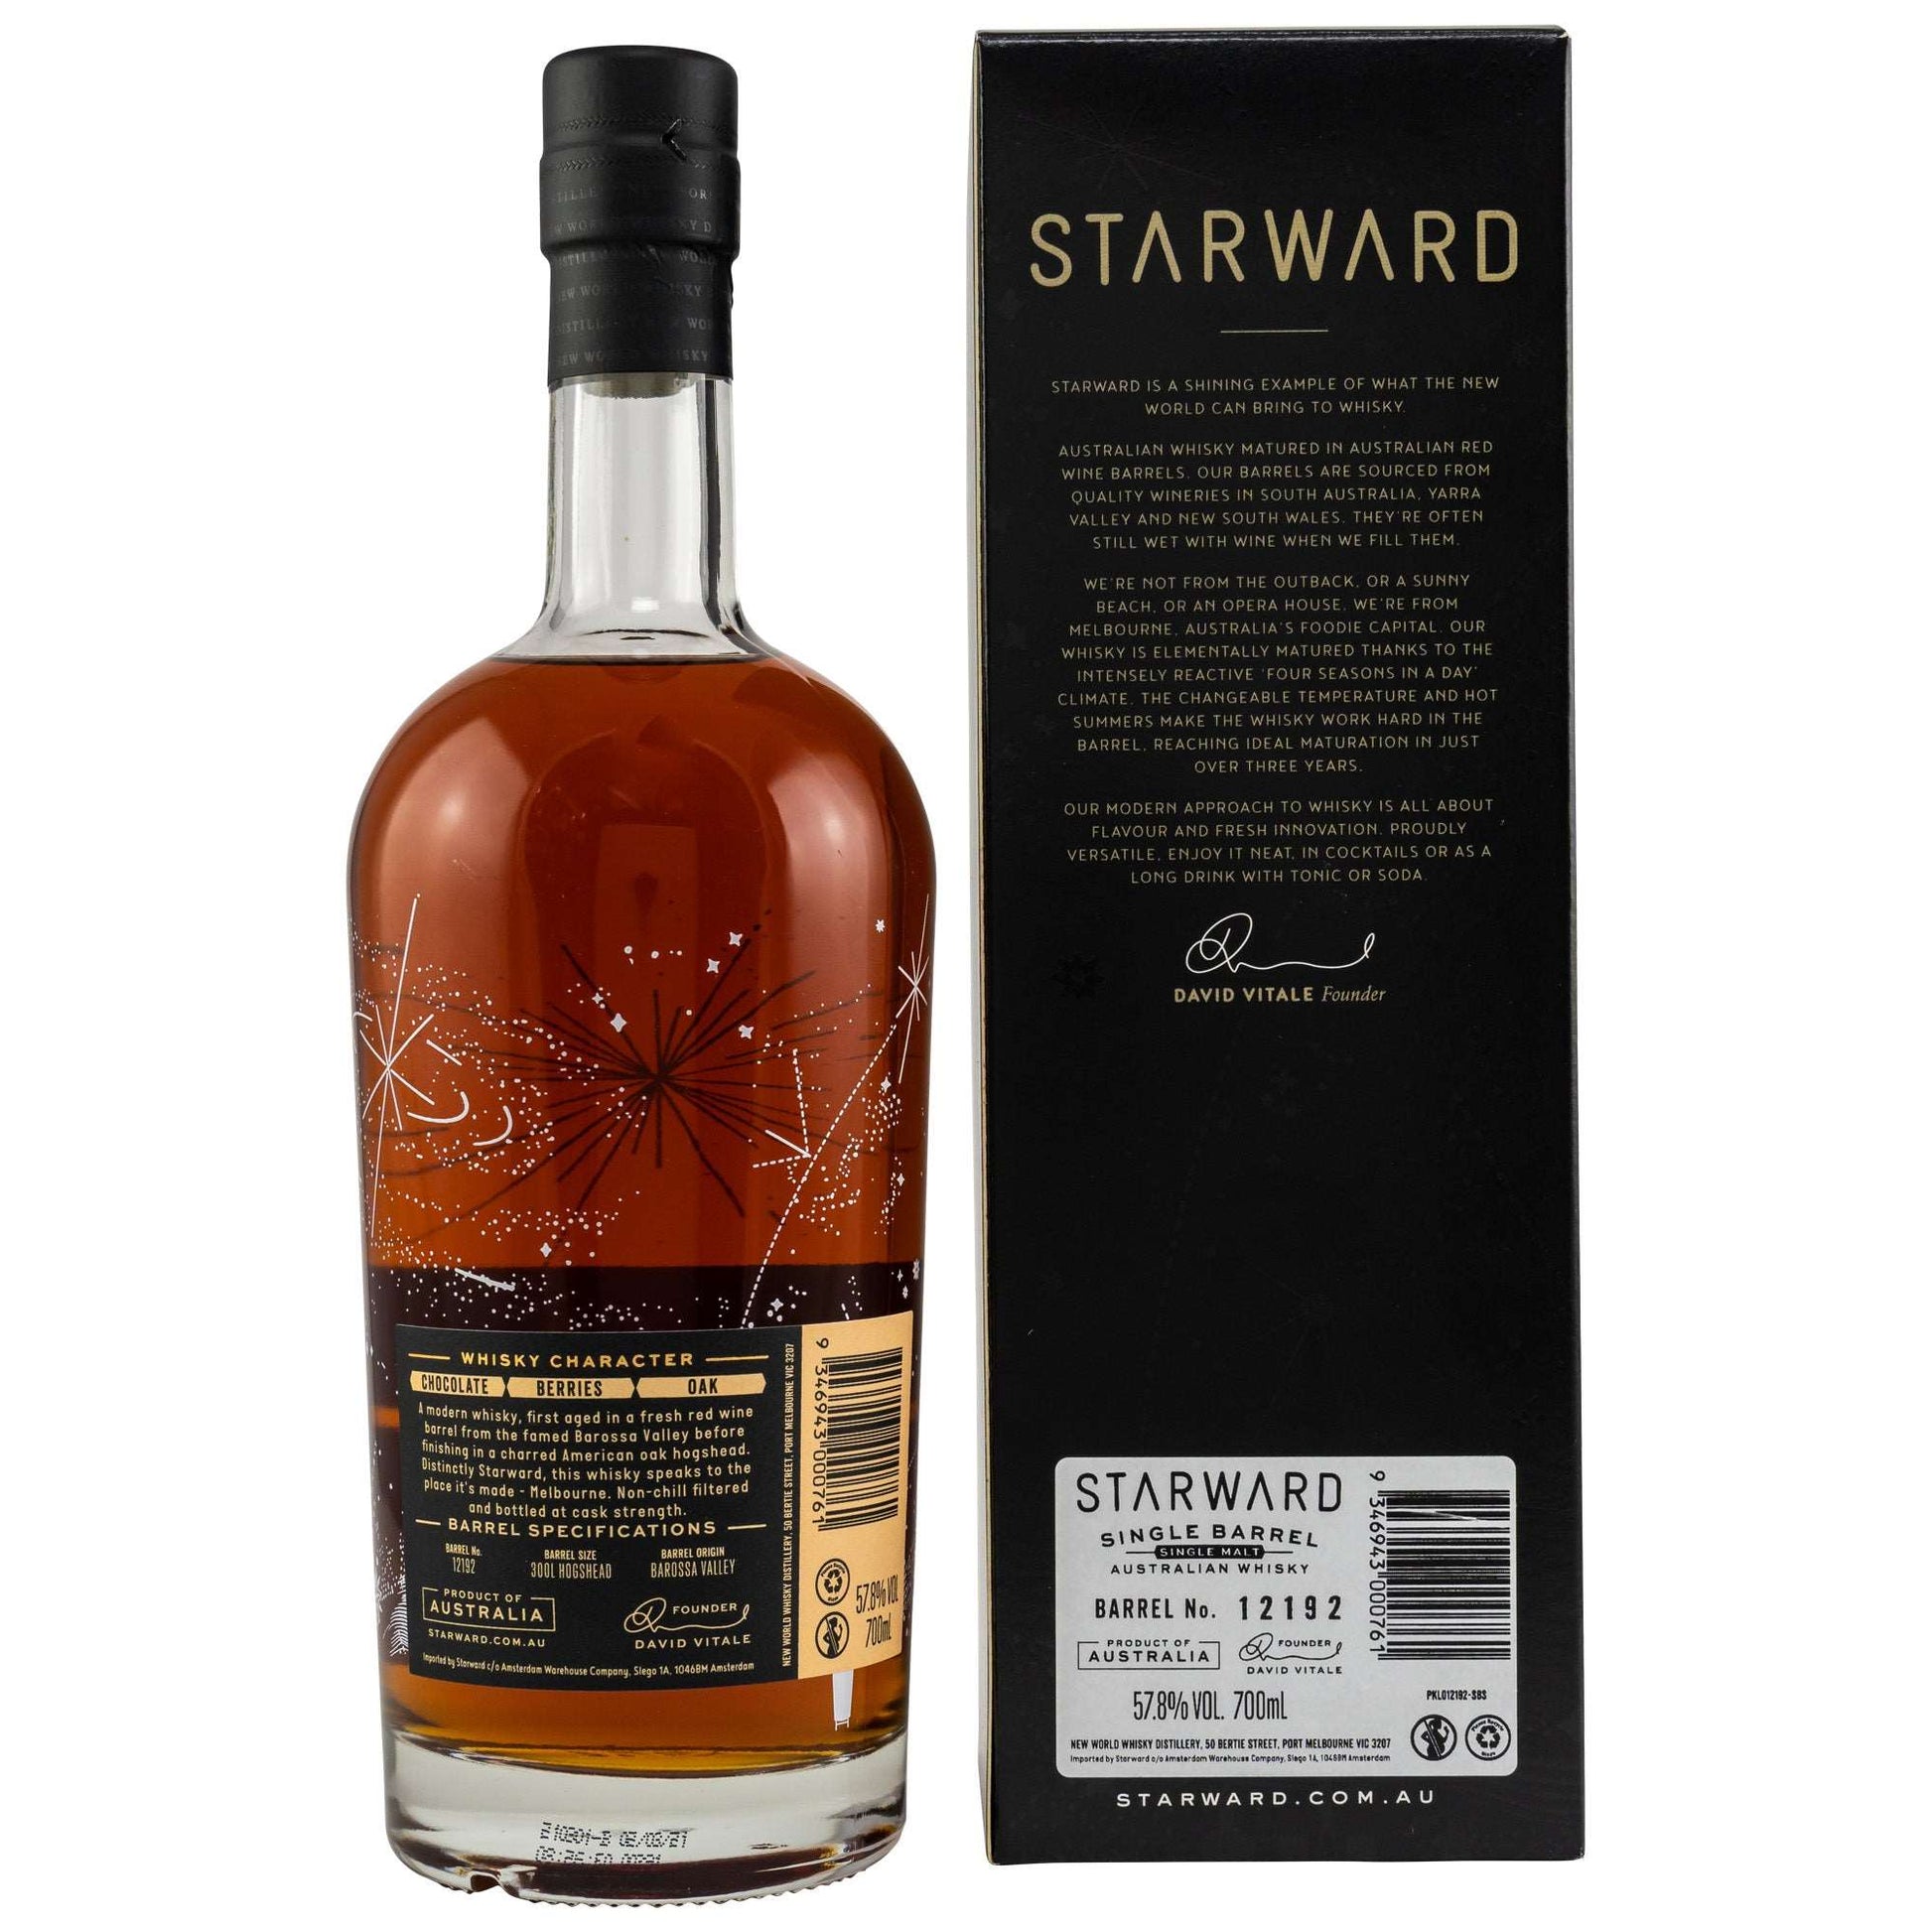 Starward | 4 Jahre | 2016/2021 | Single Barrel | Single Malt Australian Whisky | 0,7l | 57,8%GET A BOTTLE